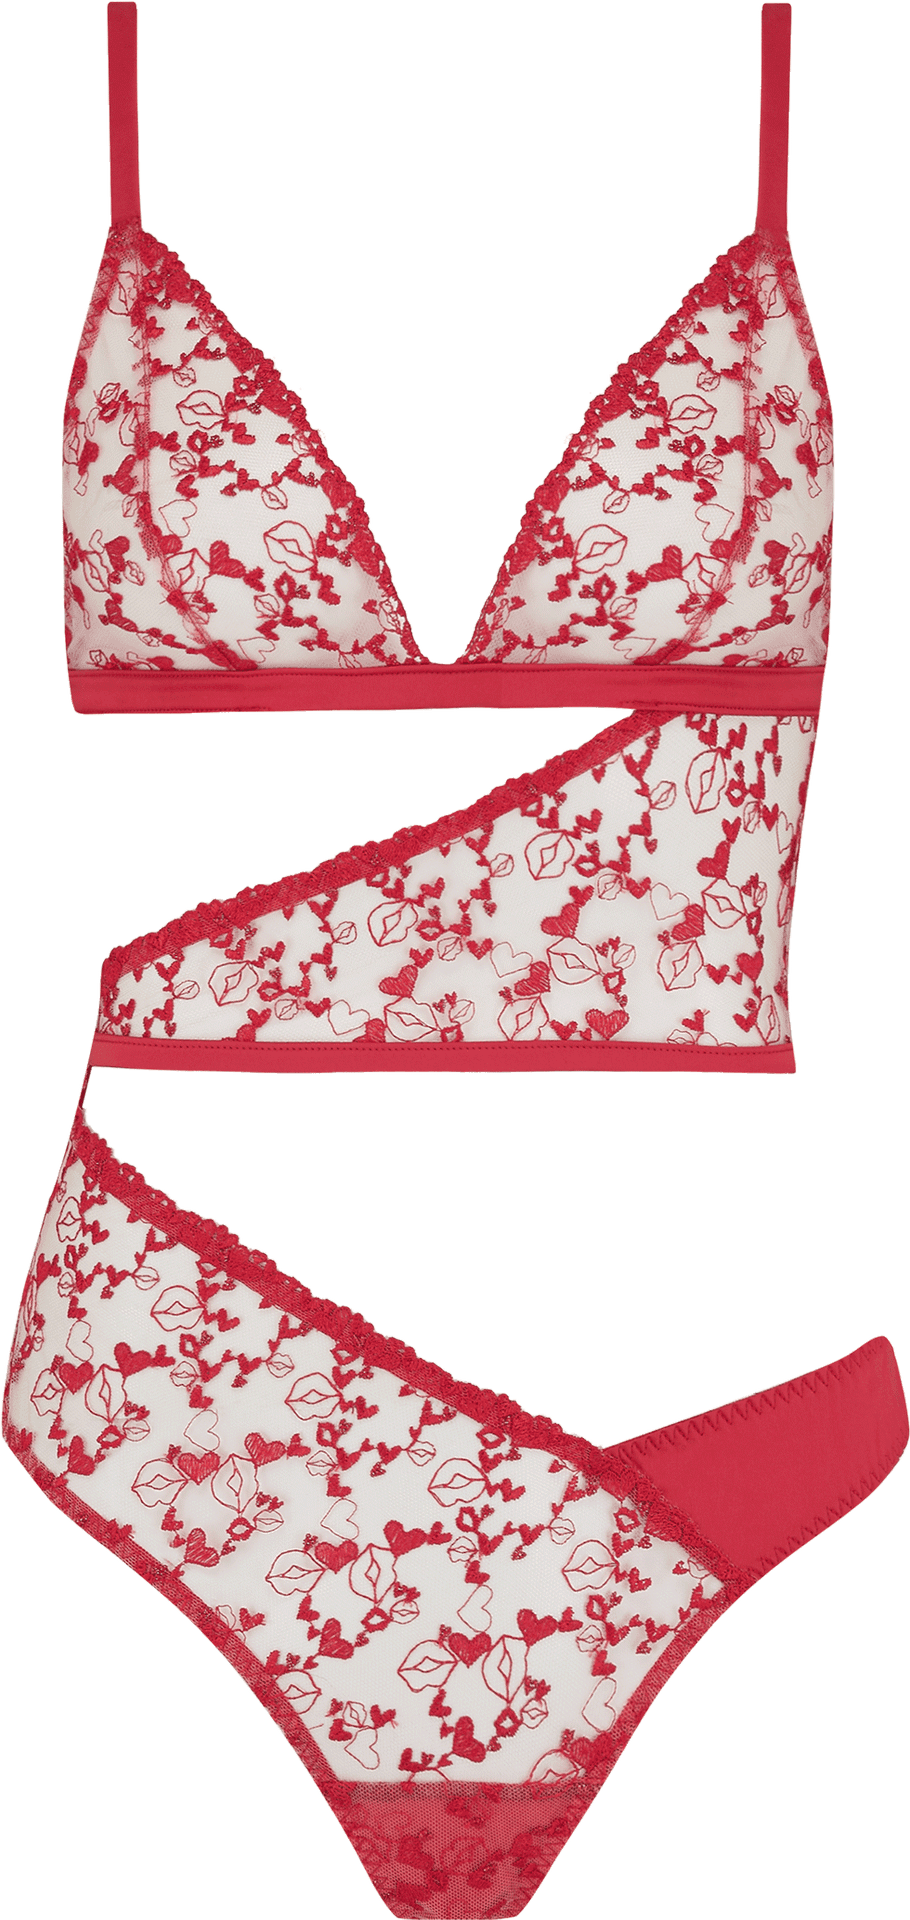 Red Floral Lace Lingerie Set PNG image